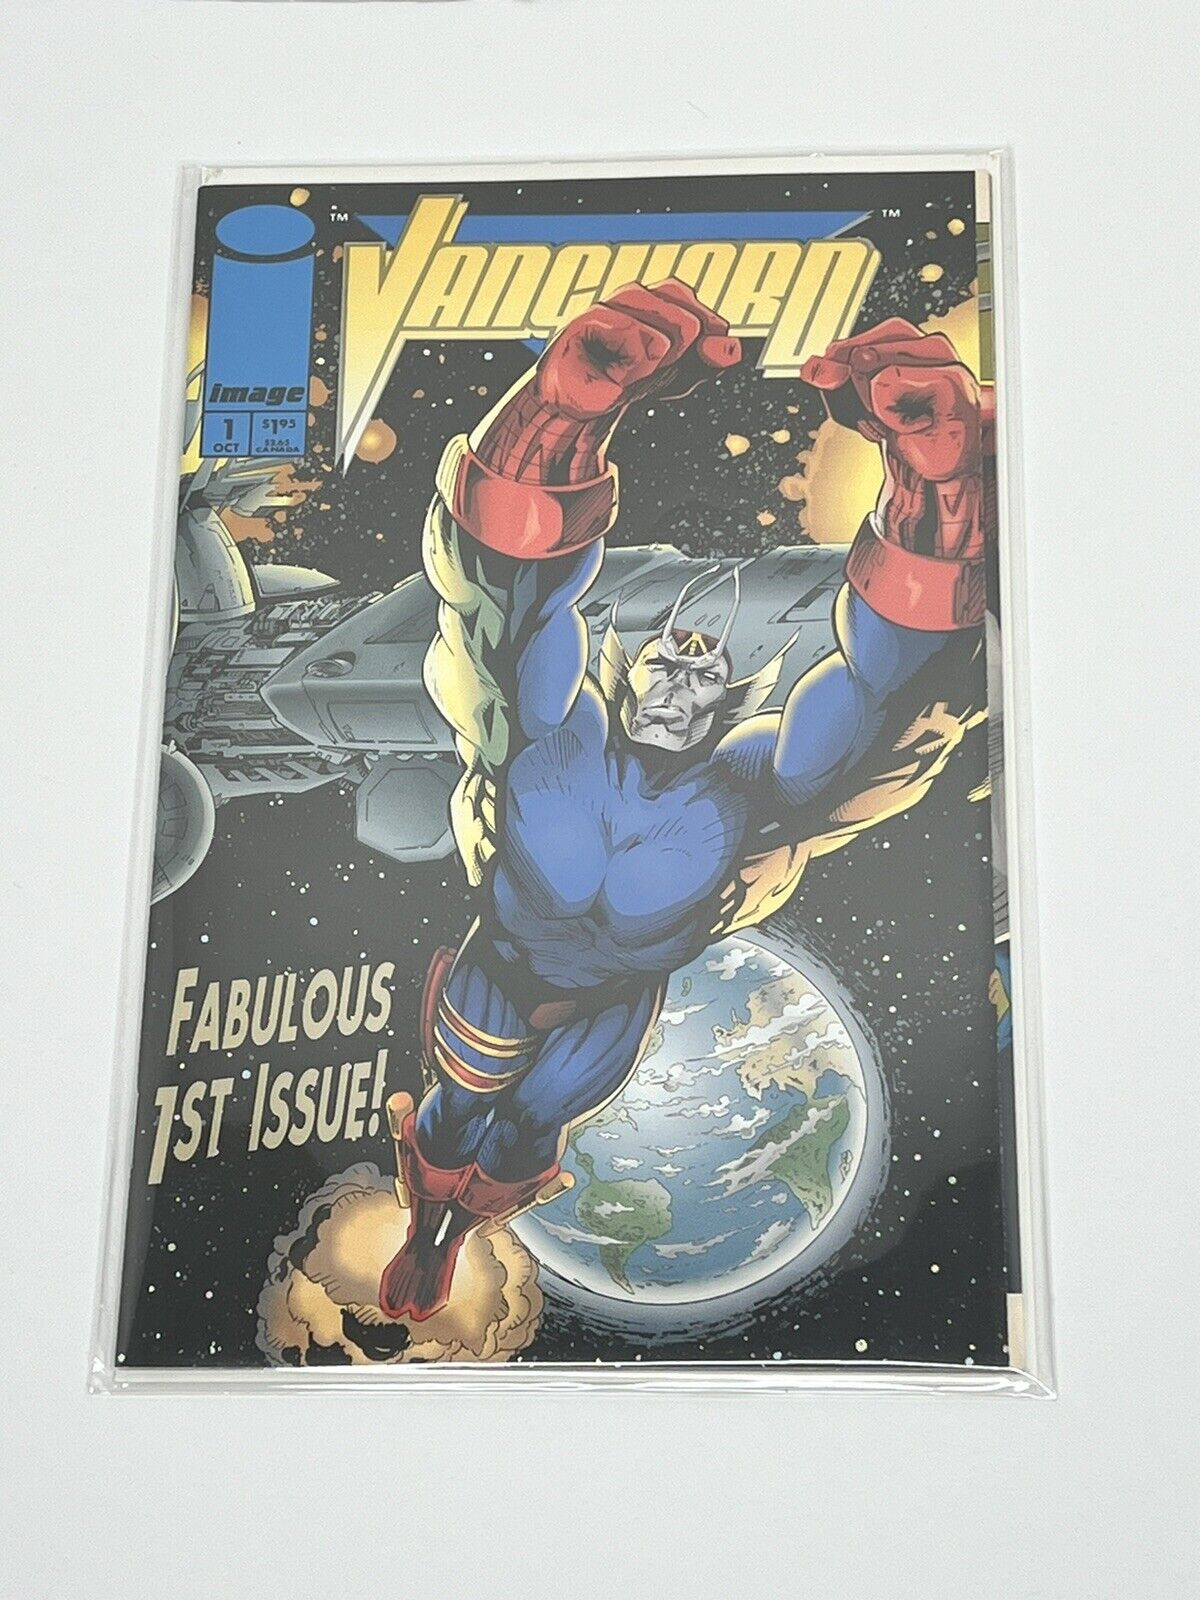 Image Comic - Vanguard #1 Oct - Fabulous 1st Issue